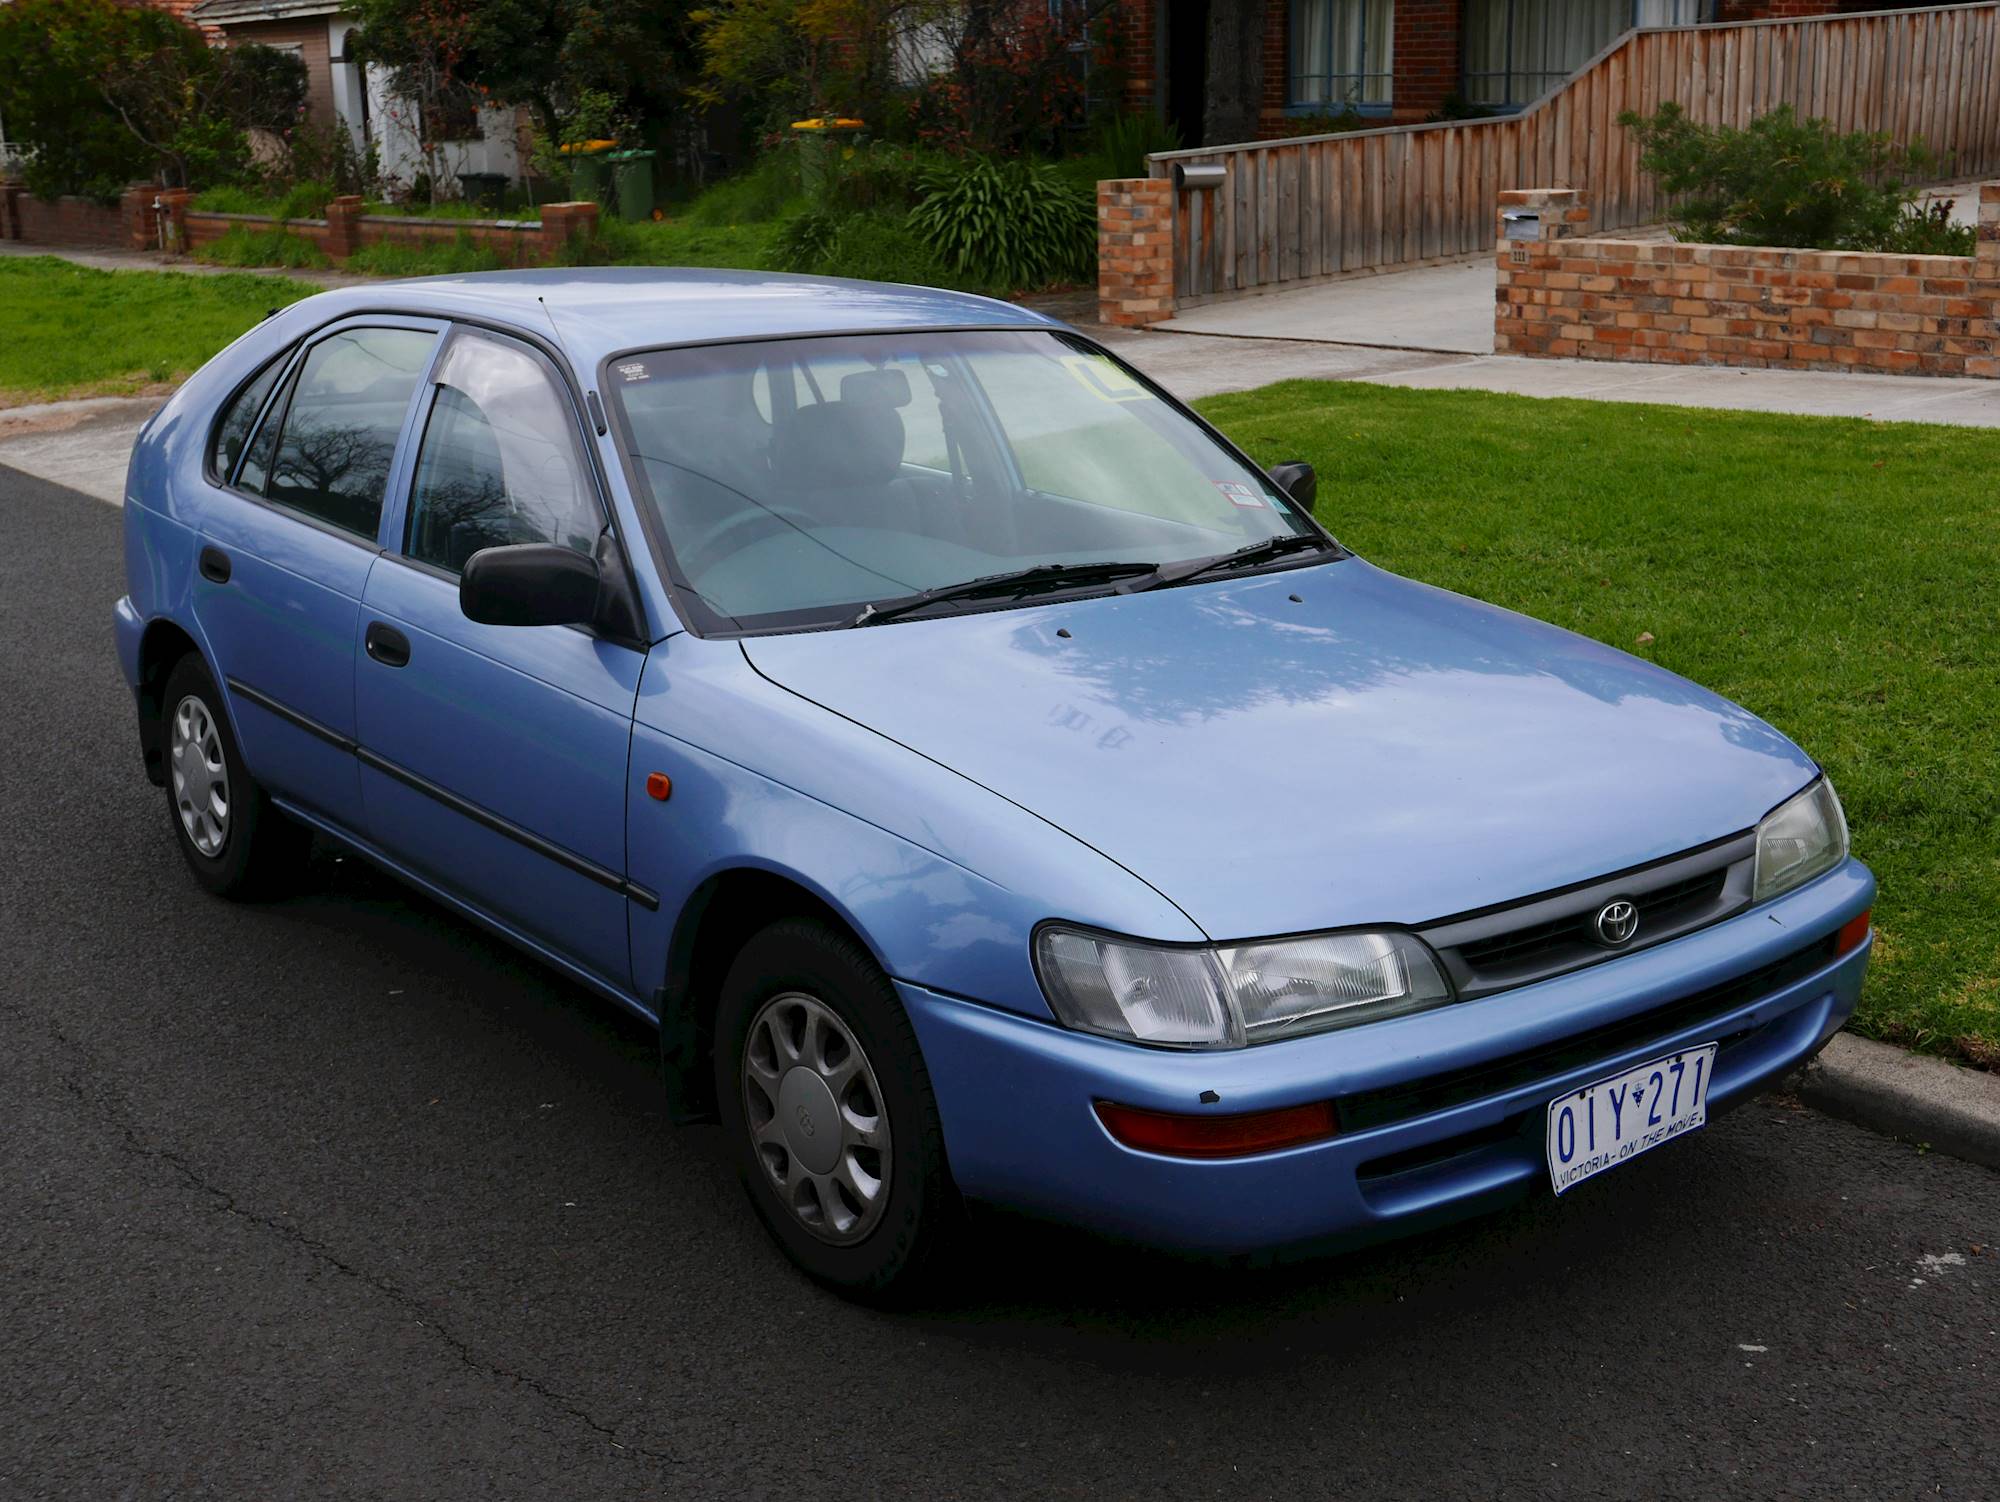 1997-toyota-corolla-dx-sedan-1-8l-manual